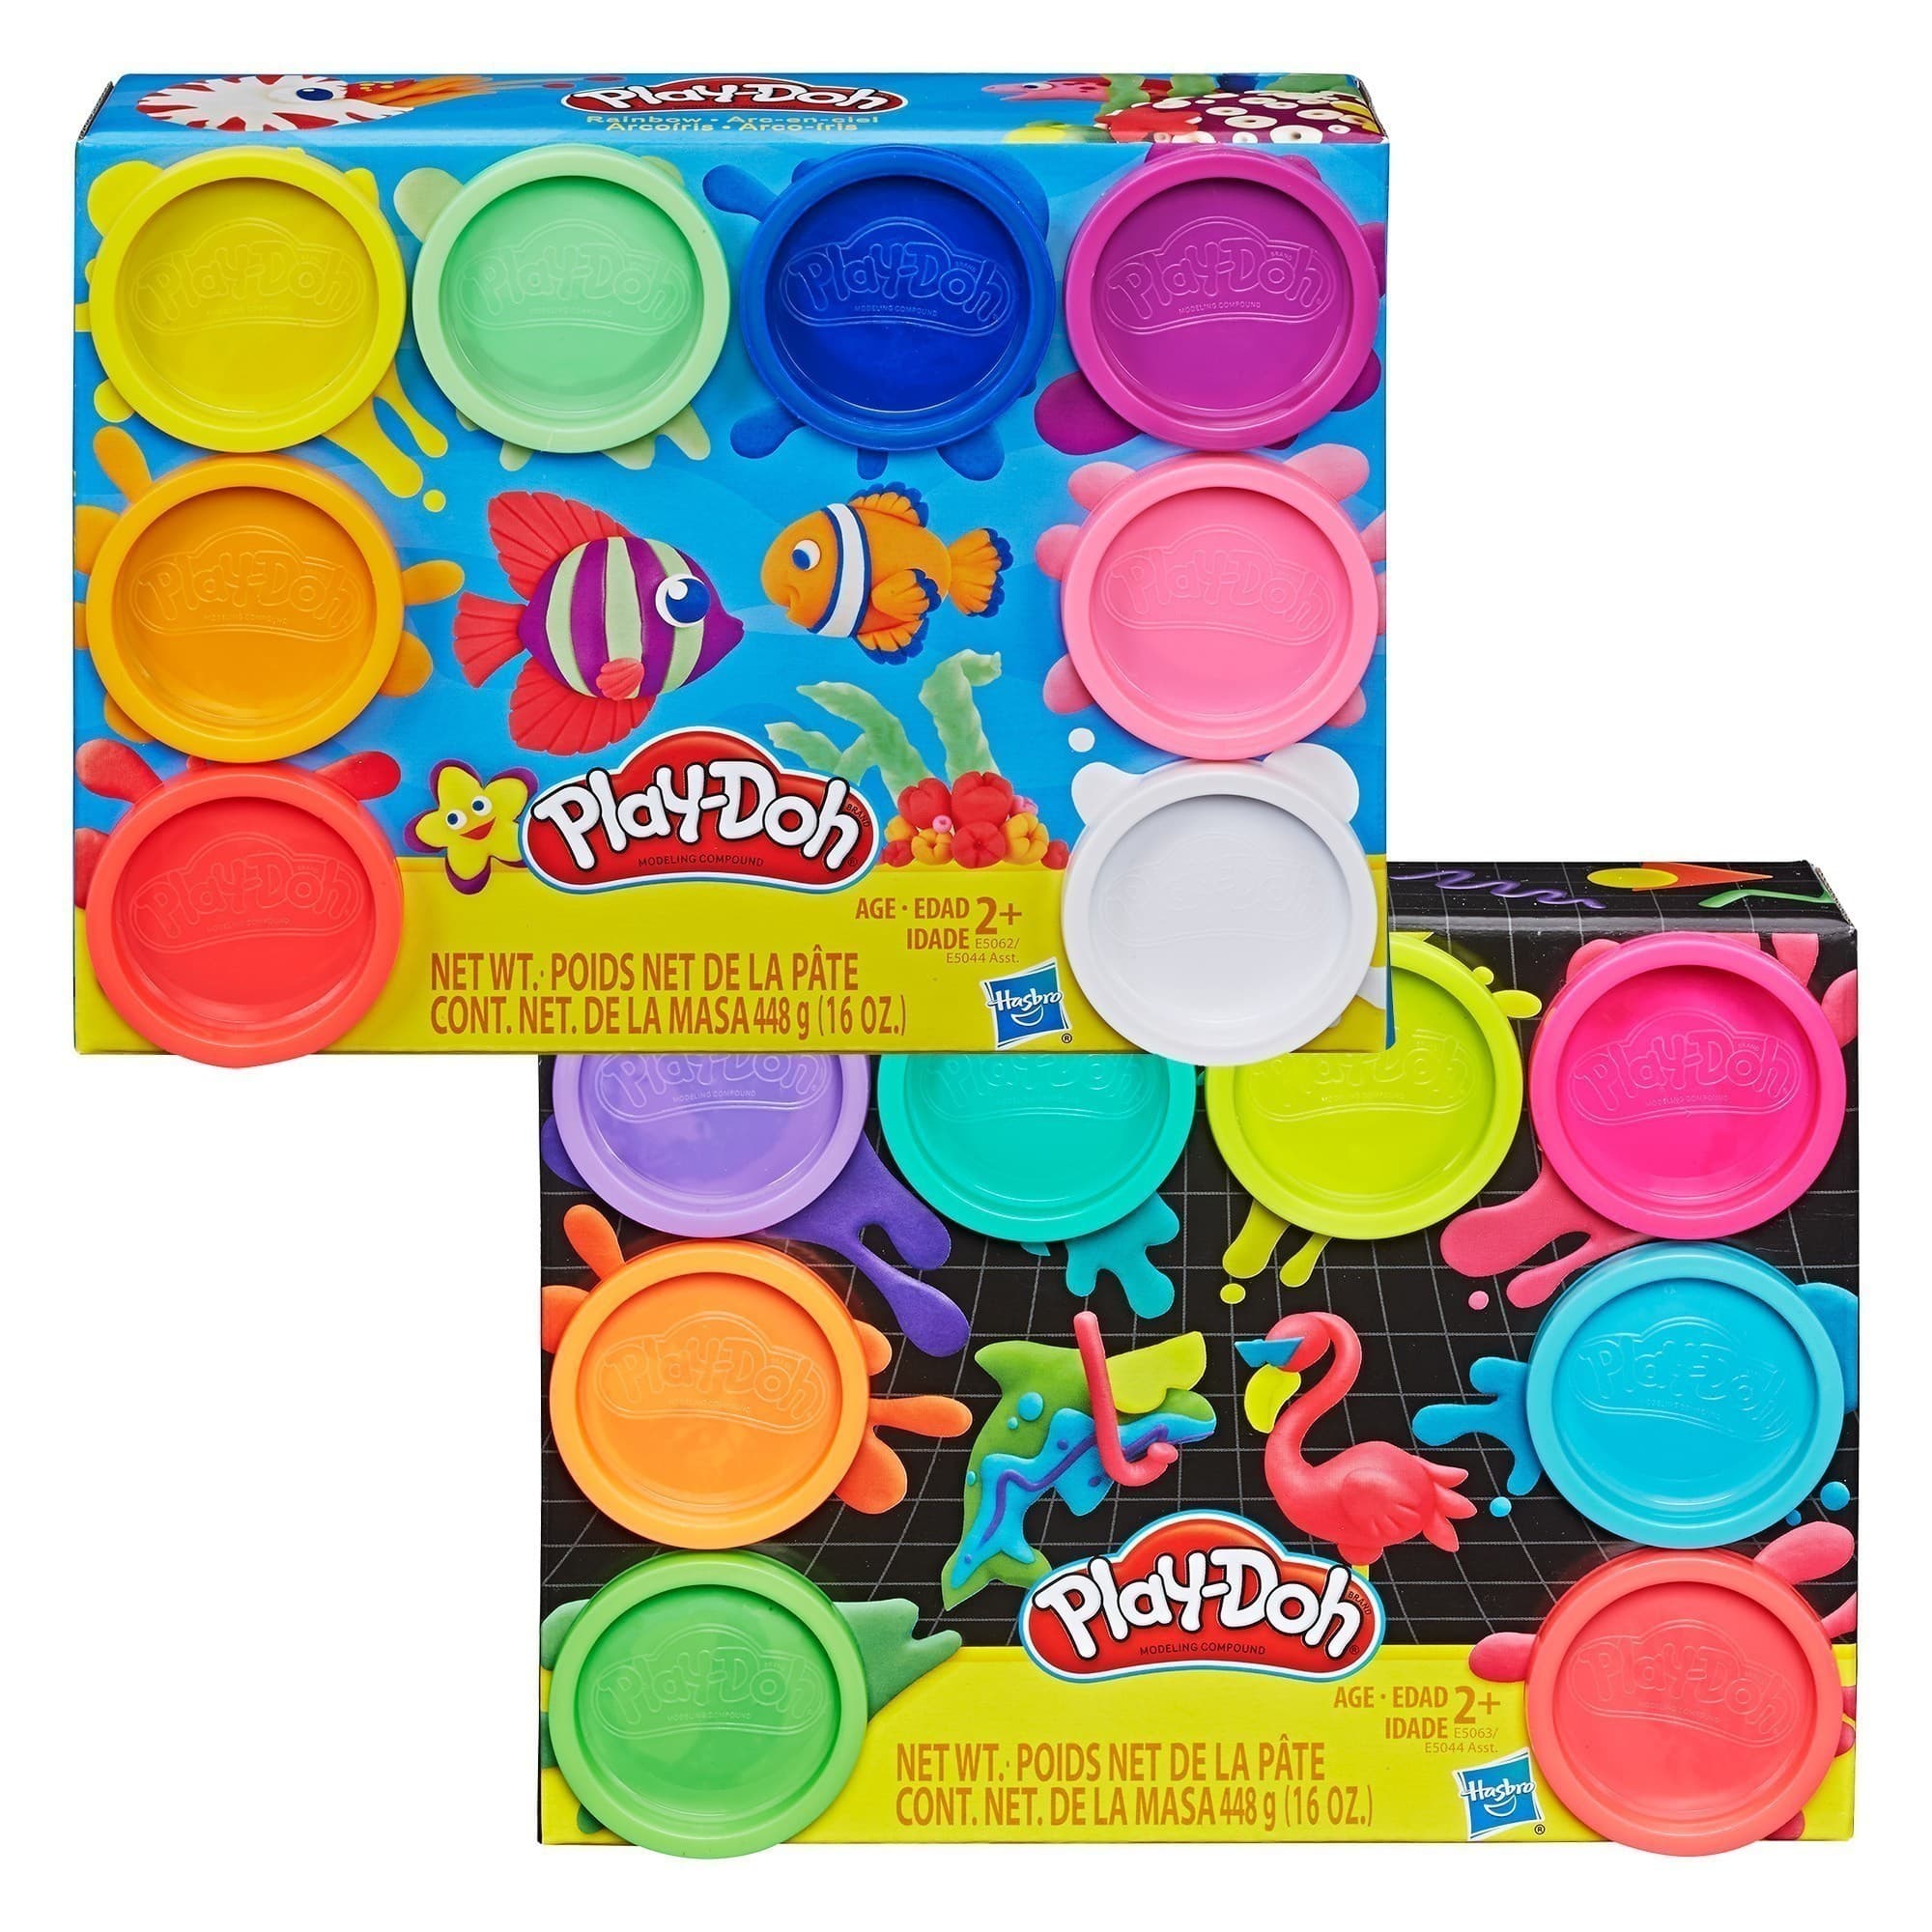 Play-Doh - 8 Pack Tub Assortment